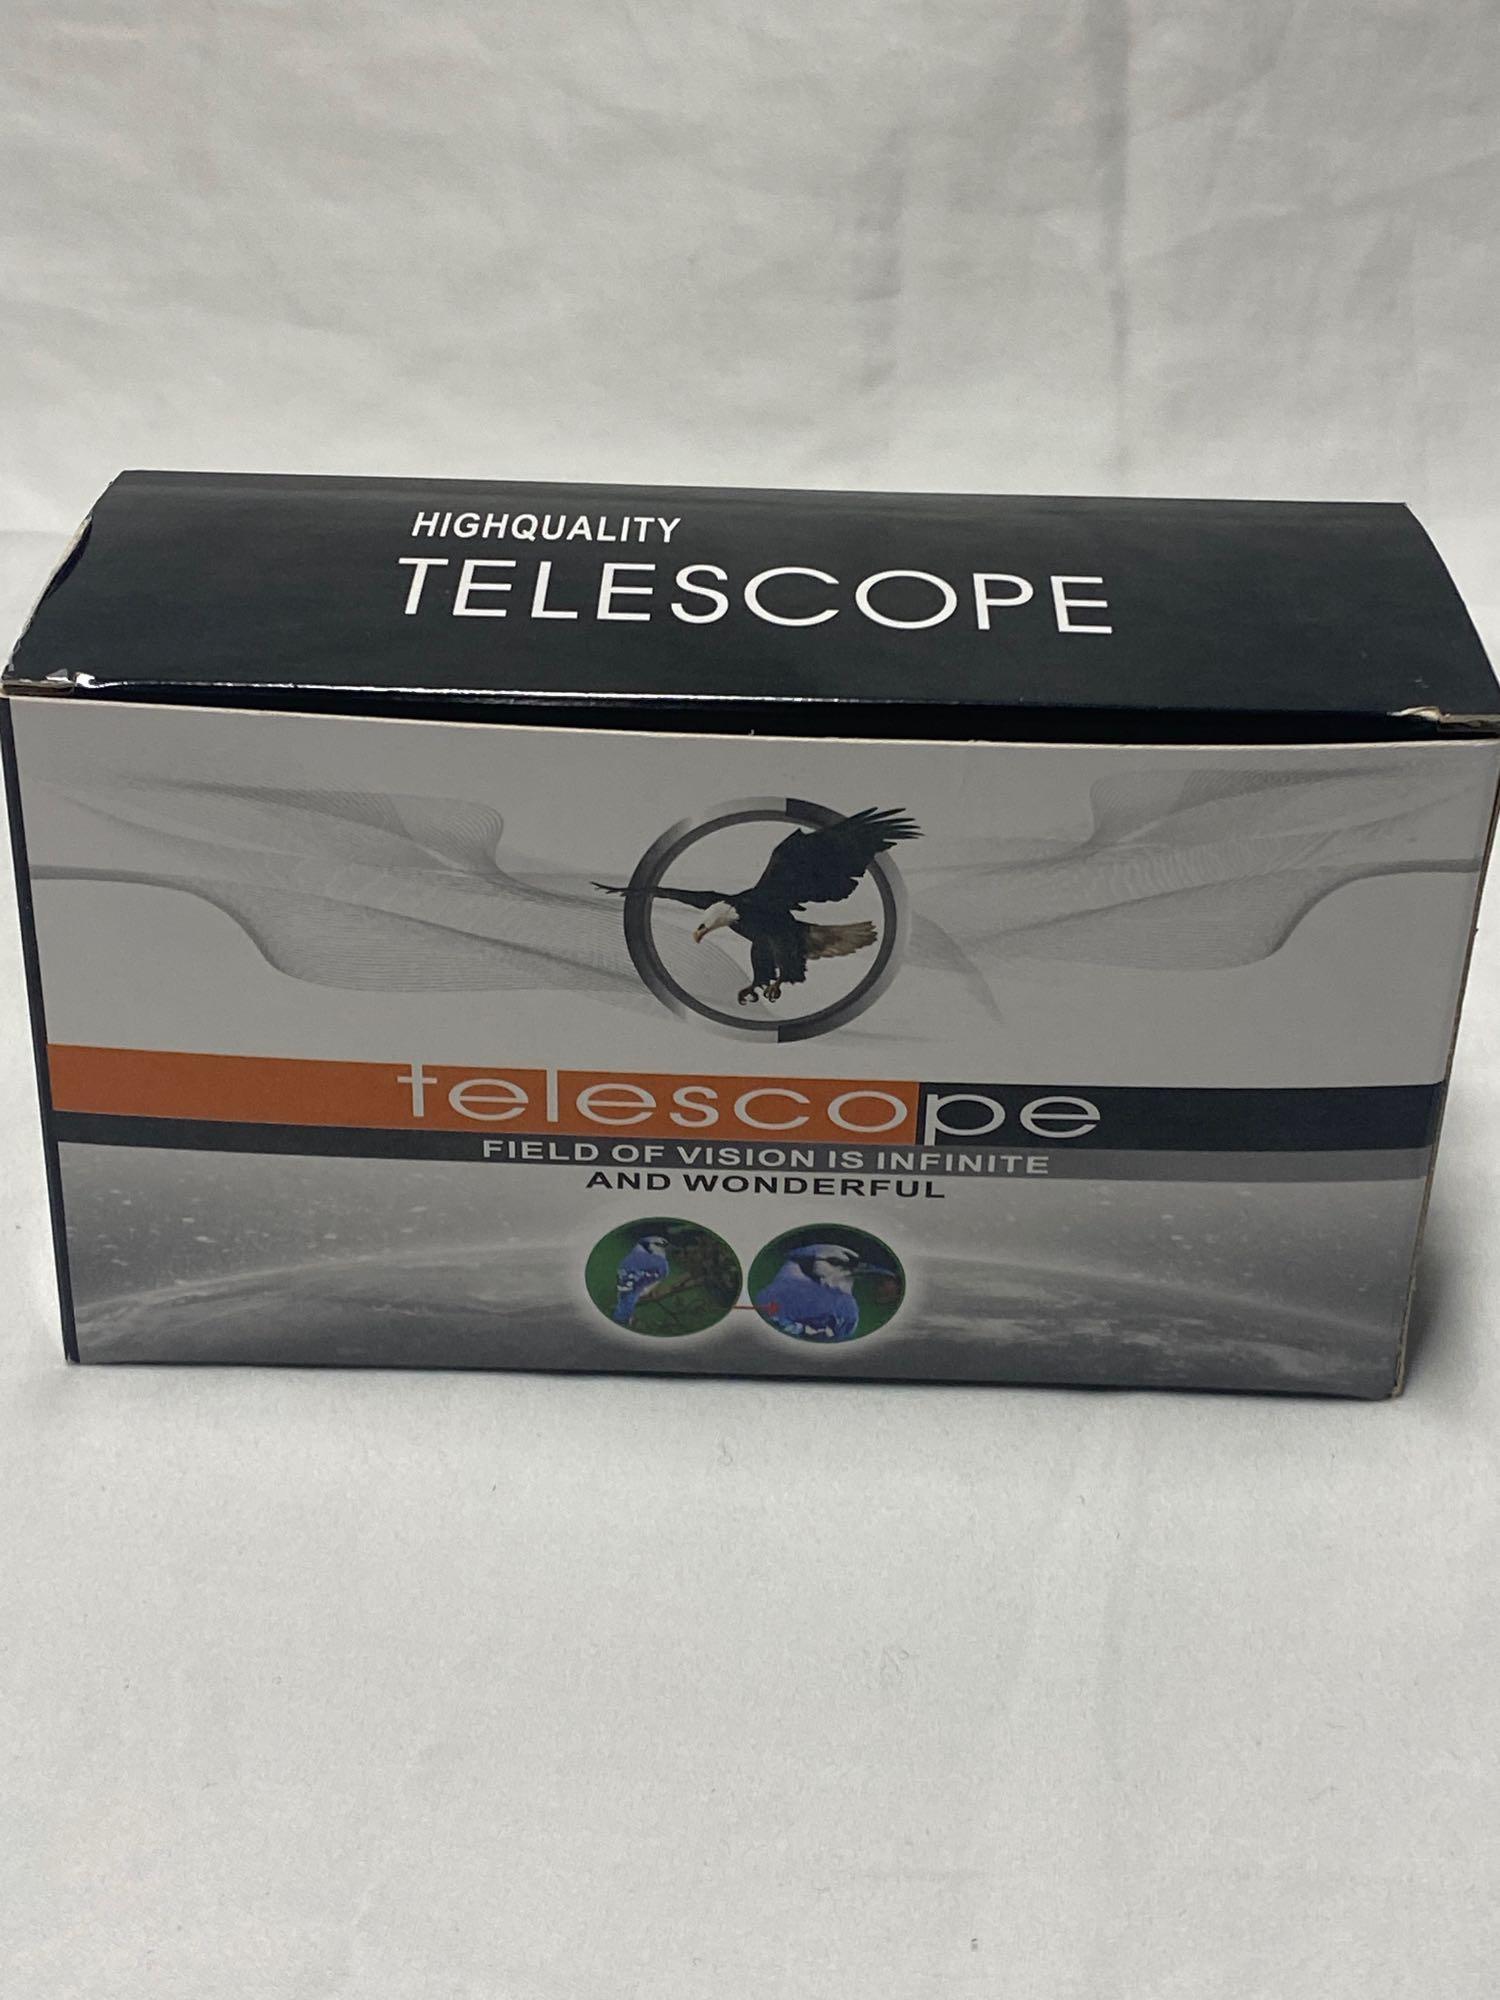 40x60 Zoom Monocular Telescope Scope Lens For Smartphone Camera, $36.99 MSRP (BRAND NEW)